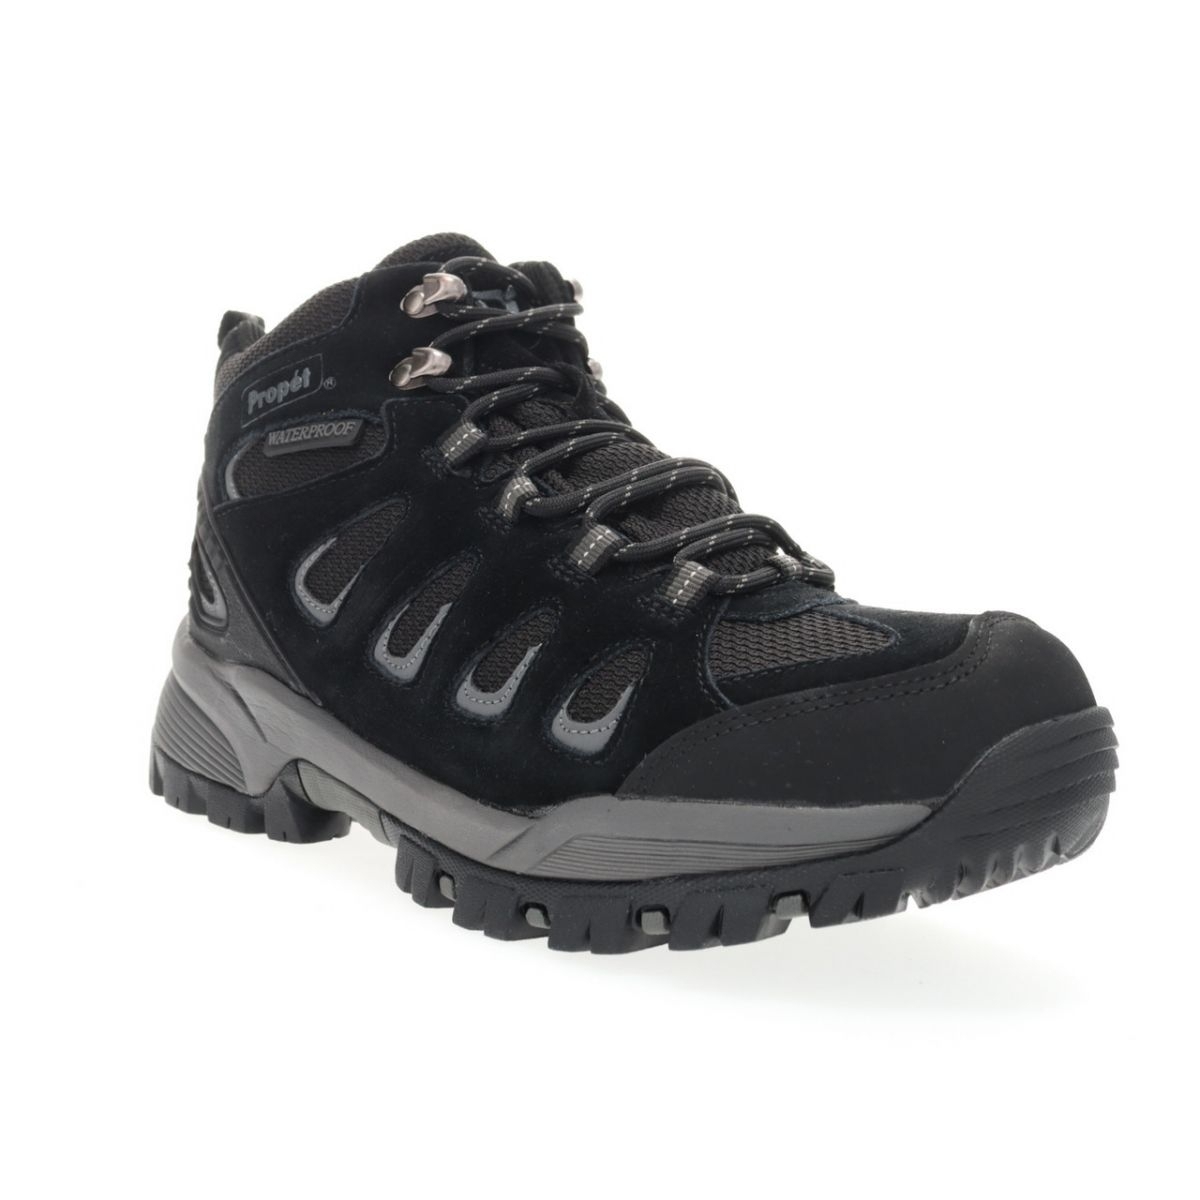 Propet Men's Ridge Walker Hiking Boot Black - M3599B 8 XX US Men BLACK - BLACK, 9.5 XX-Wide